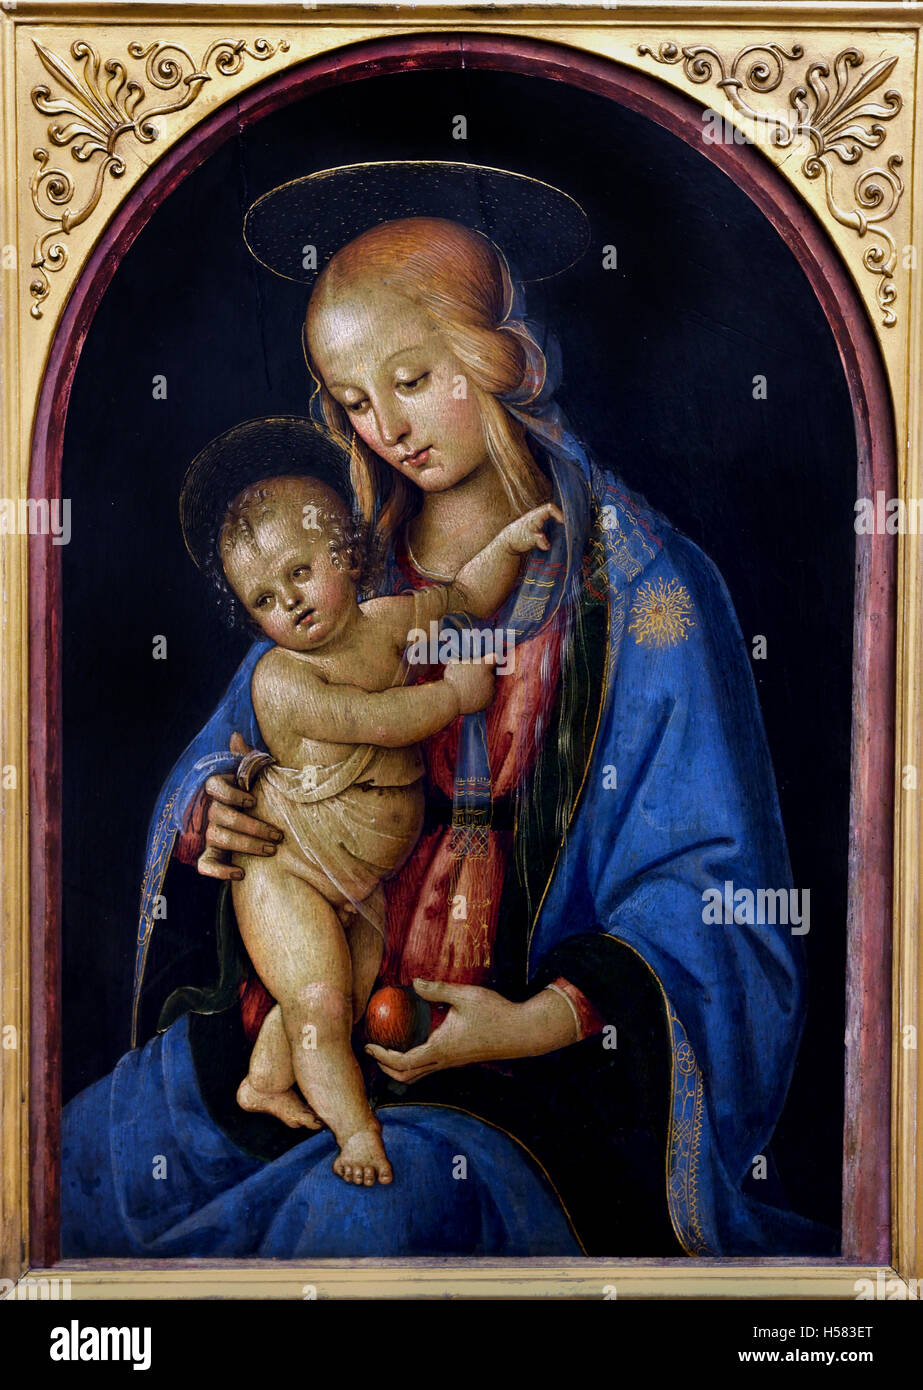 Maria mit Kind von Andrea di Aloigi - Andrea Lucini 1480-1521 war ein italienischer Renaissance-Maler. Perugia-Assisi-Italien Stockfoto